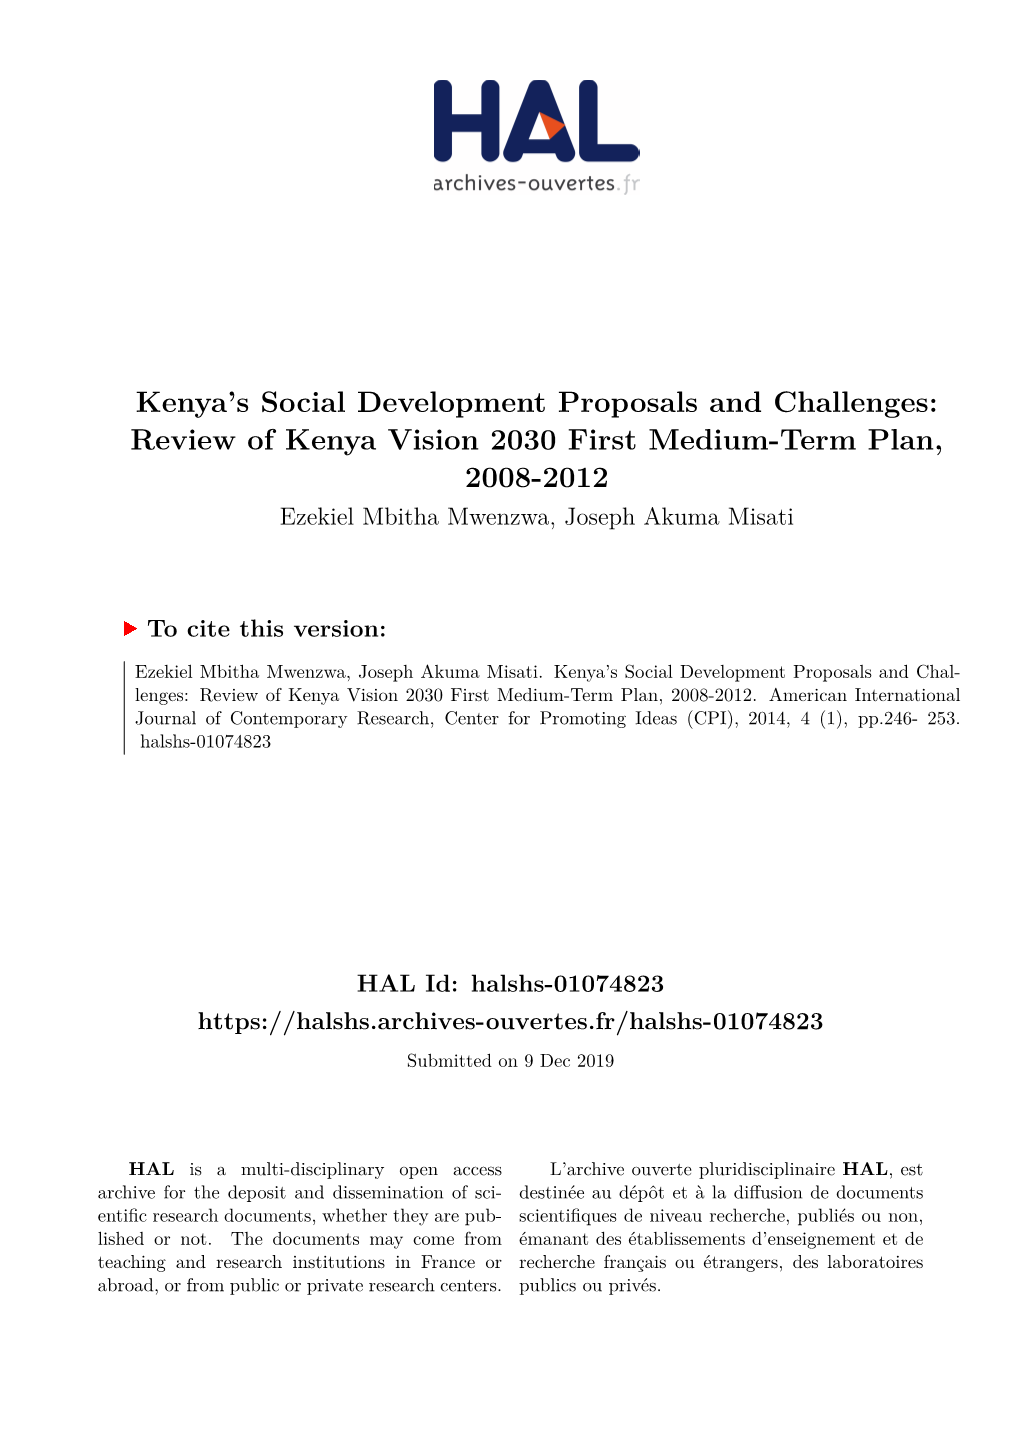 Review of Kenya Vision 2030 First Medium-Term Plan, 2008-2012 Ezekiel Mbitha Mwenzwa, Joseph Akuma Misati